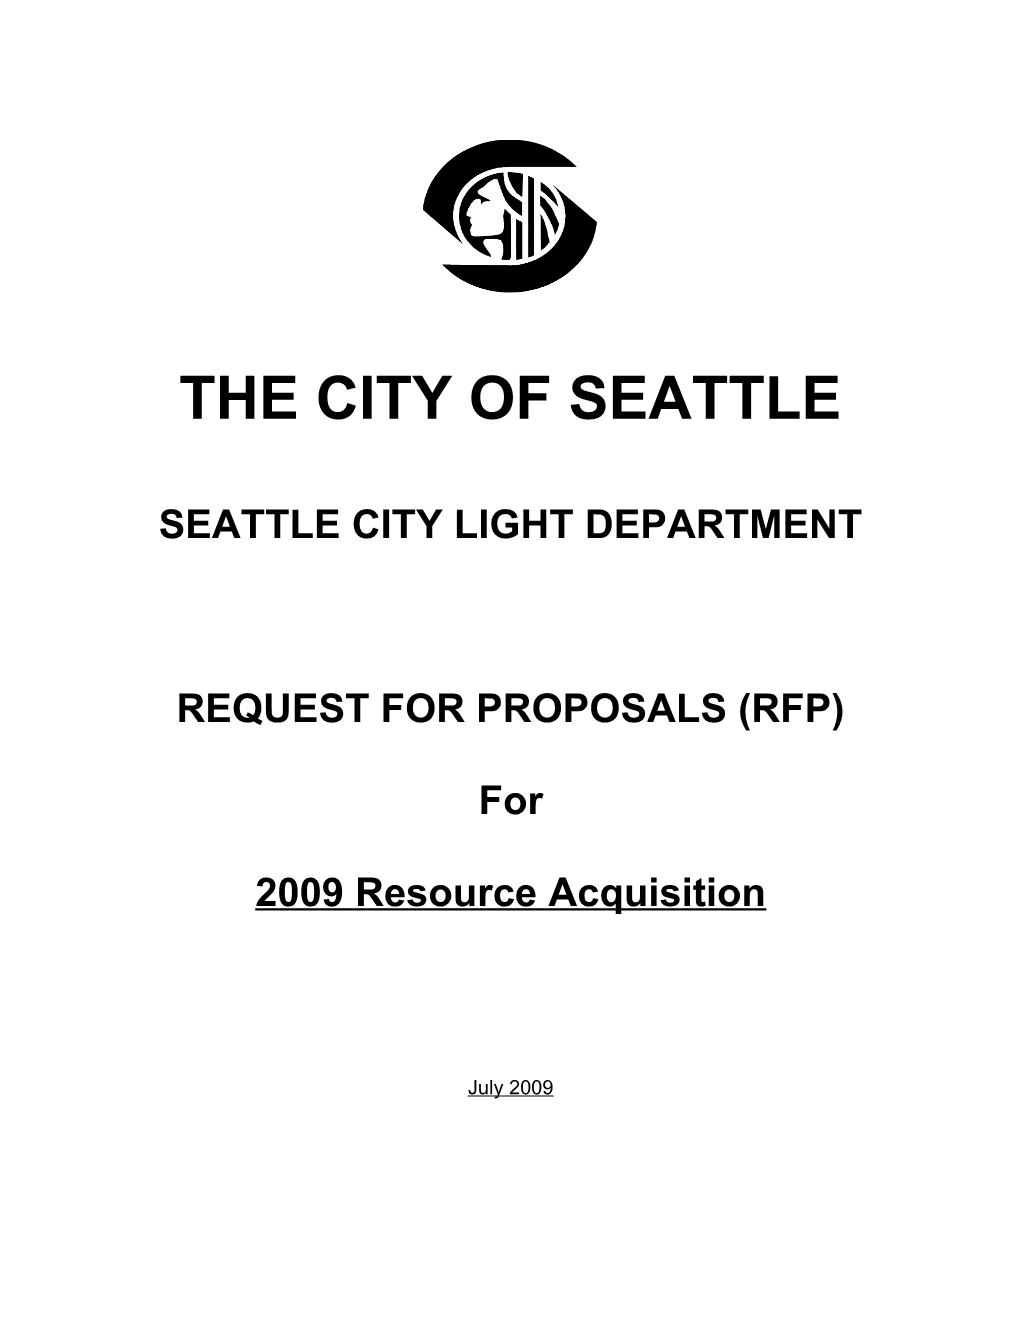 Seattle City Light Department